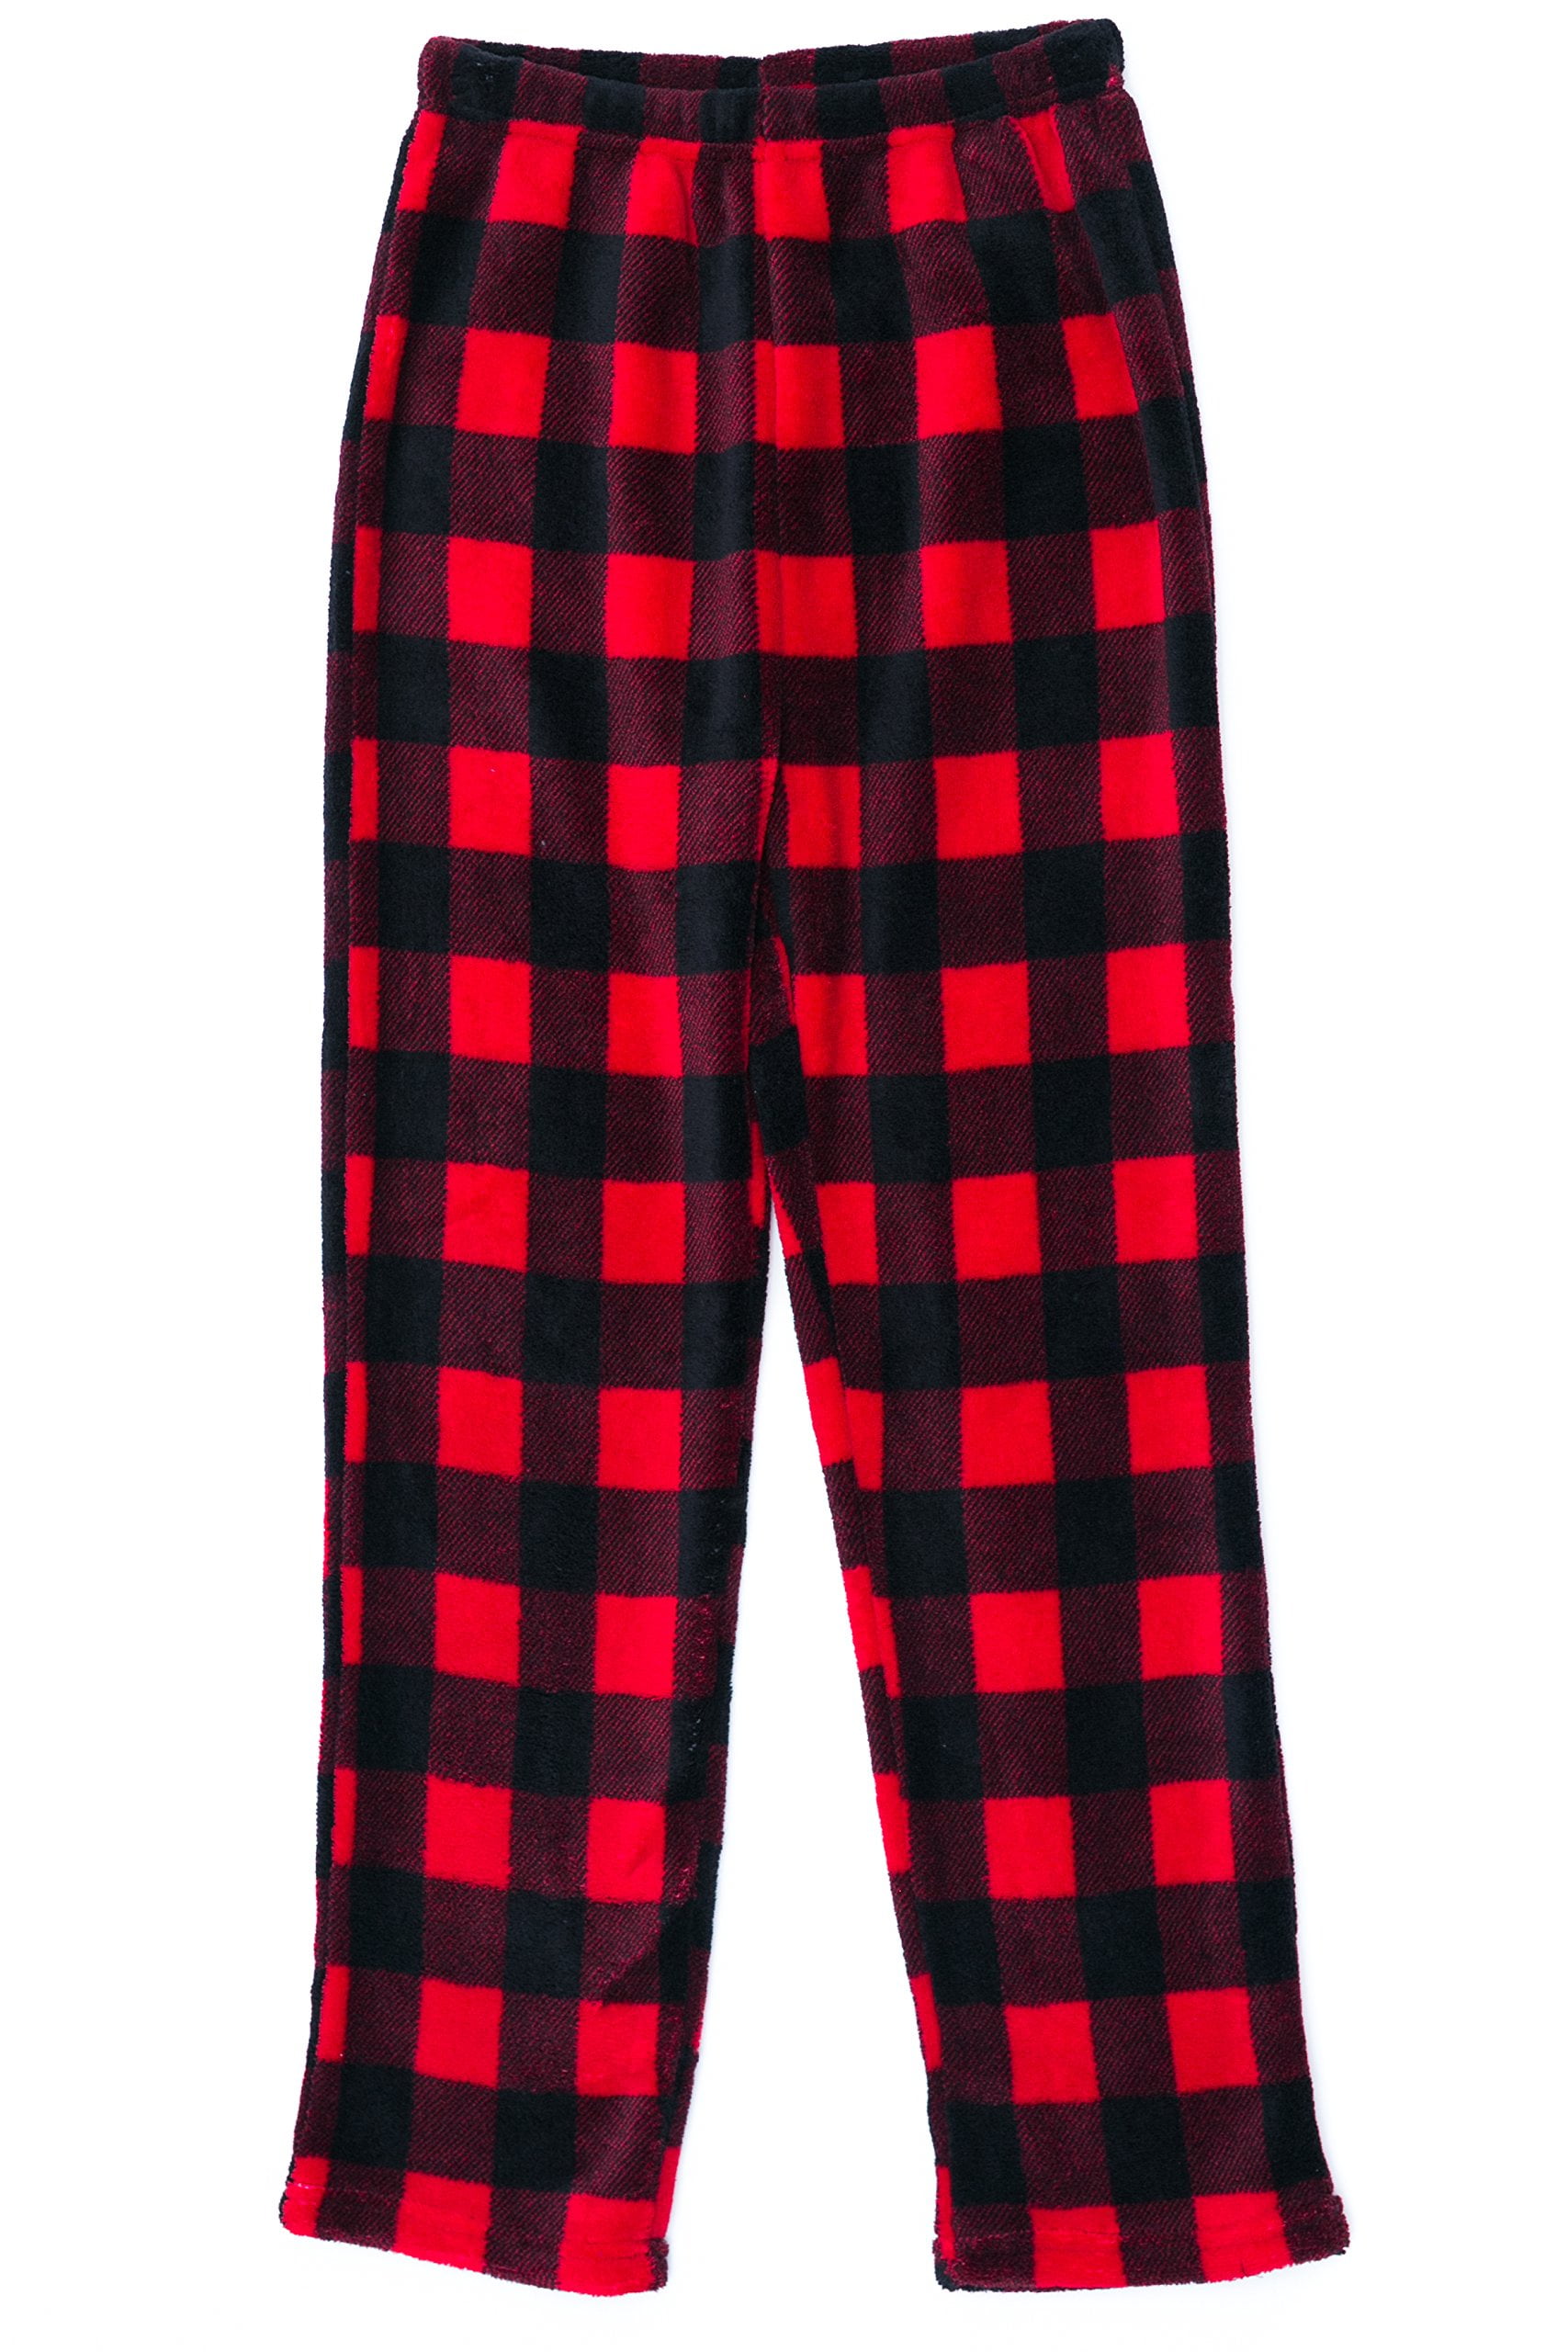 Prince of Sleep Boys' Plush Fleece Pajama Pants - Warm and Cozy Sleepwear  (Red - Buffalo Plaid, 5-6 Years)